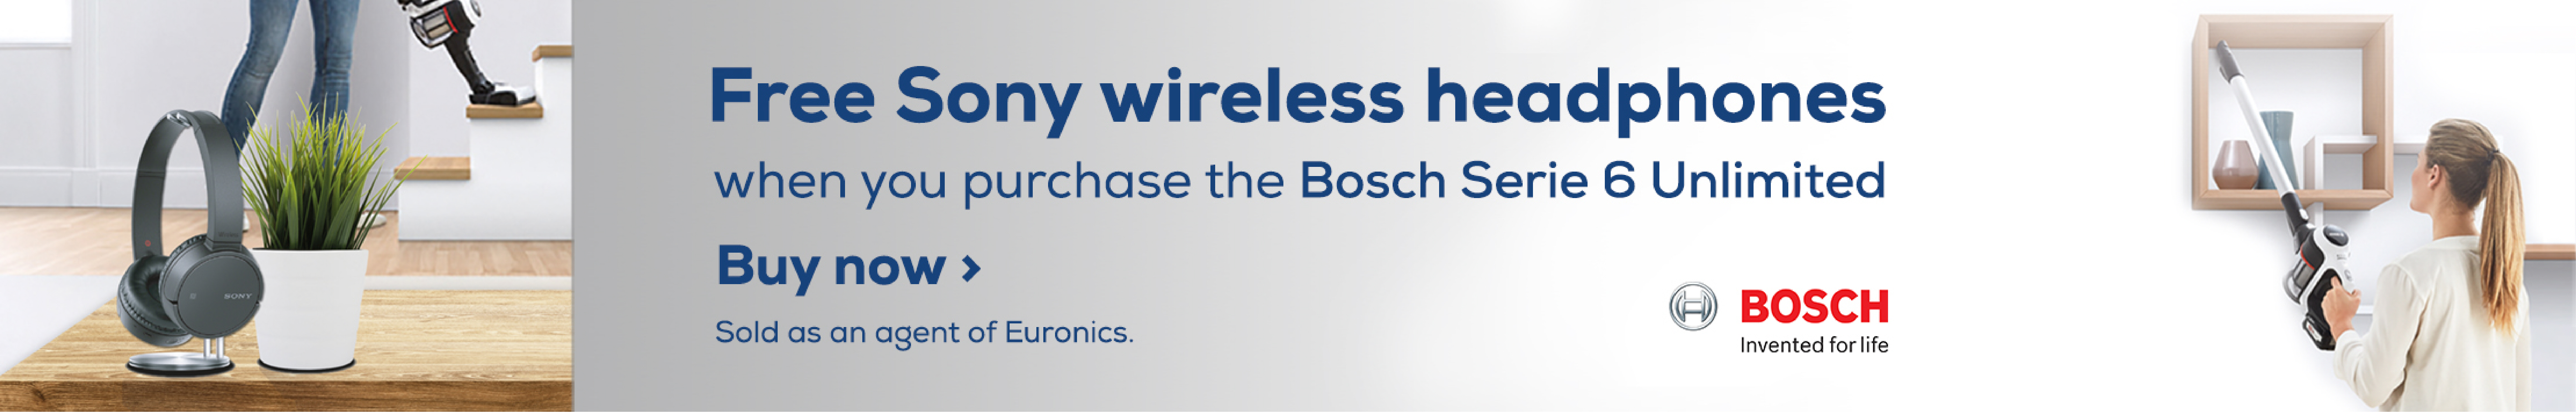 Euronics & Bosch FREE Sony Headphones